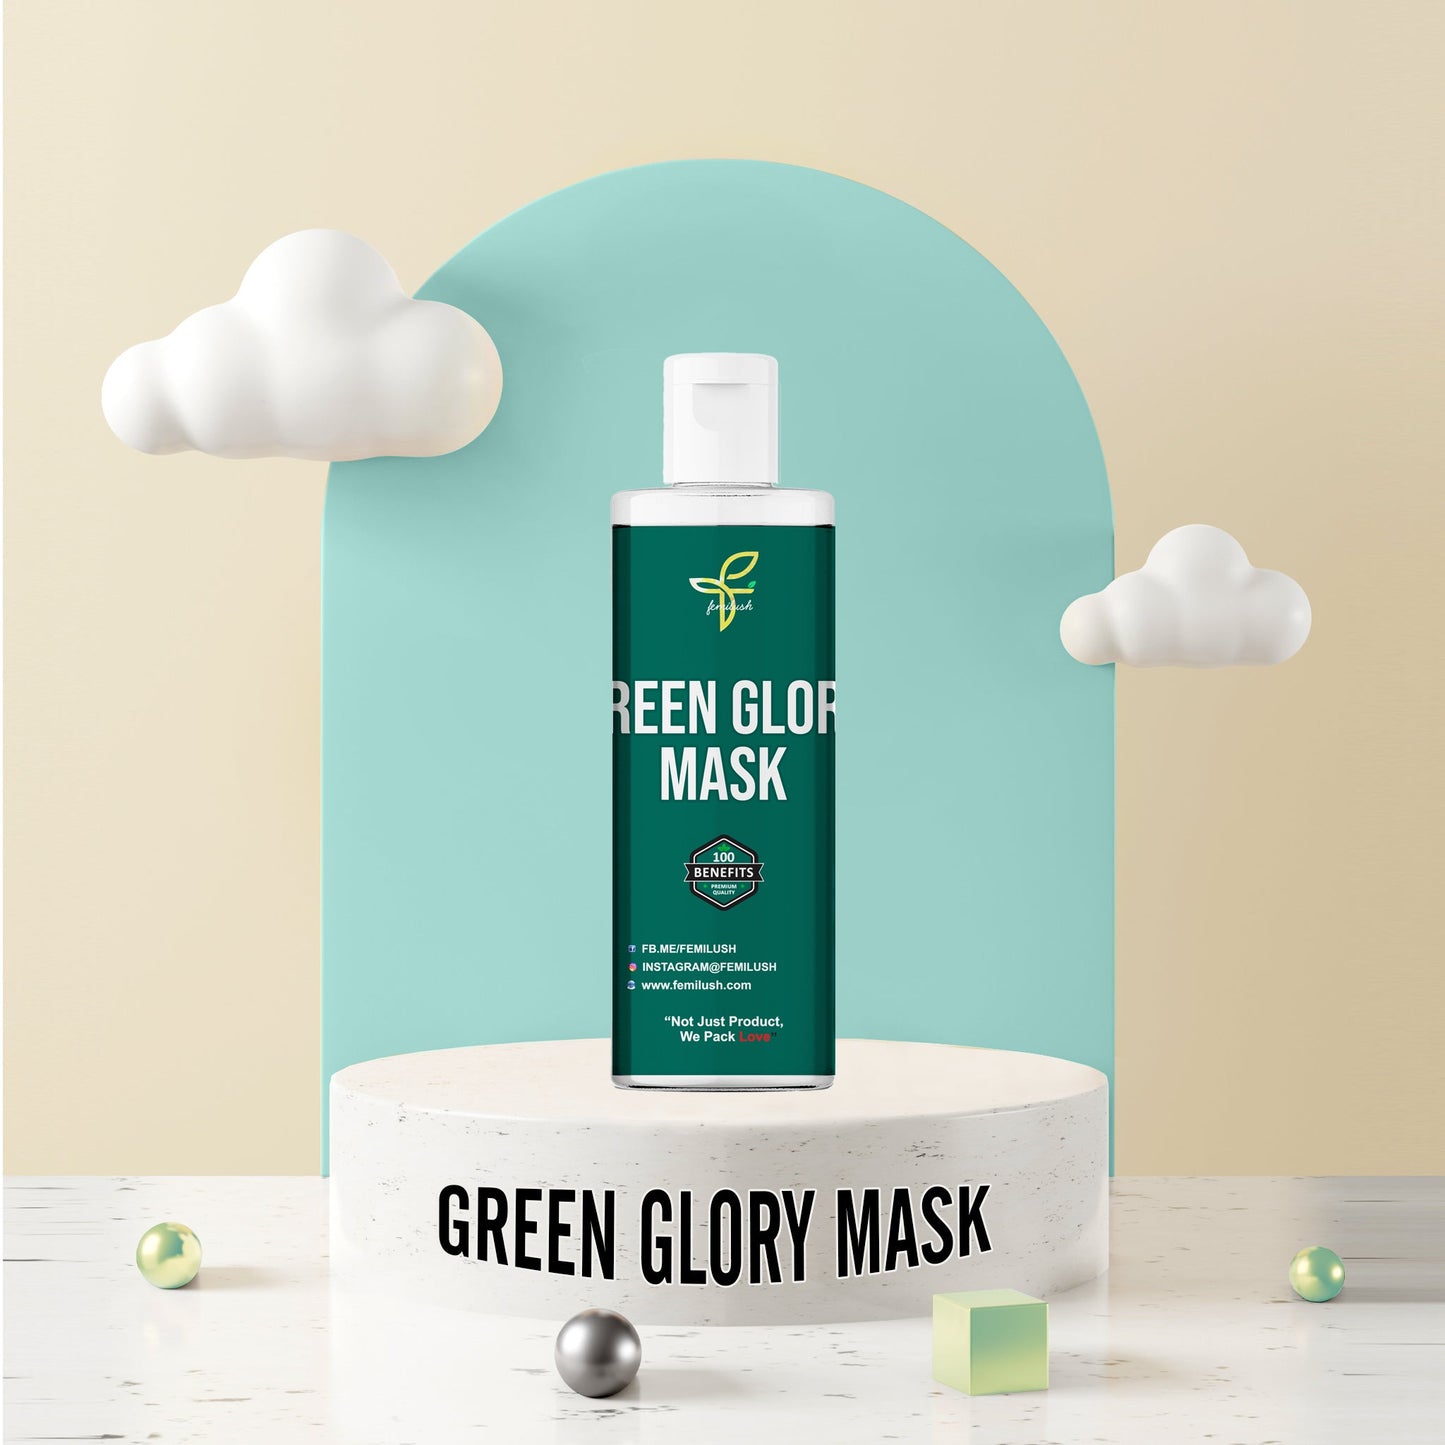 Green Glory Mask